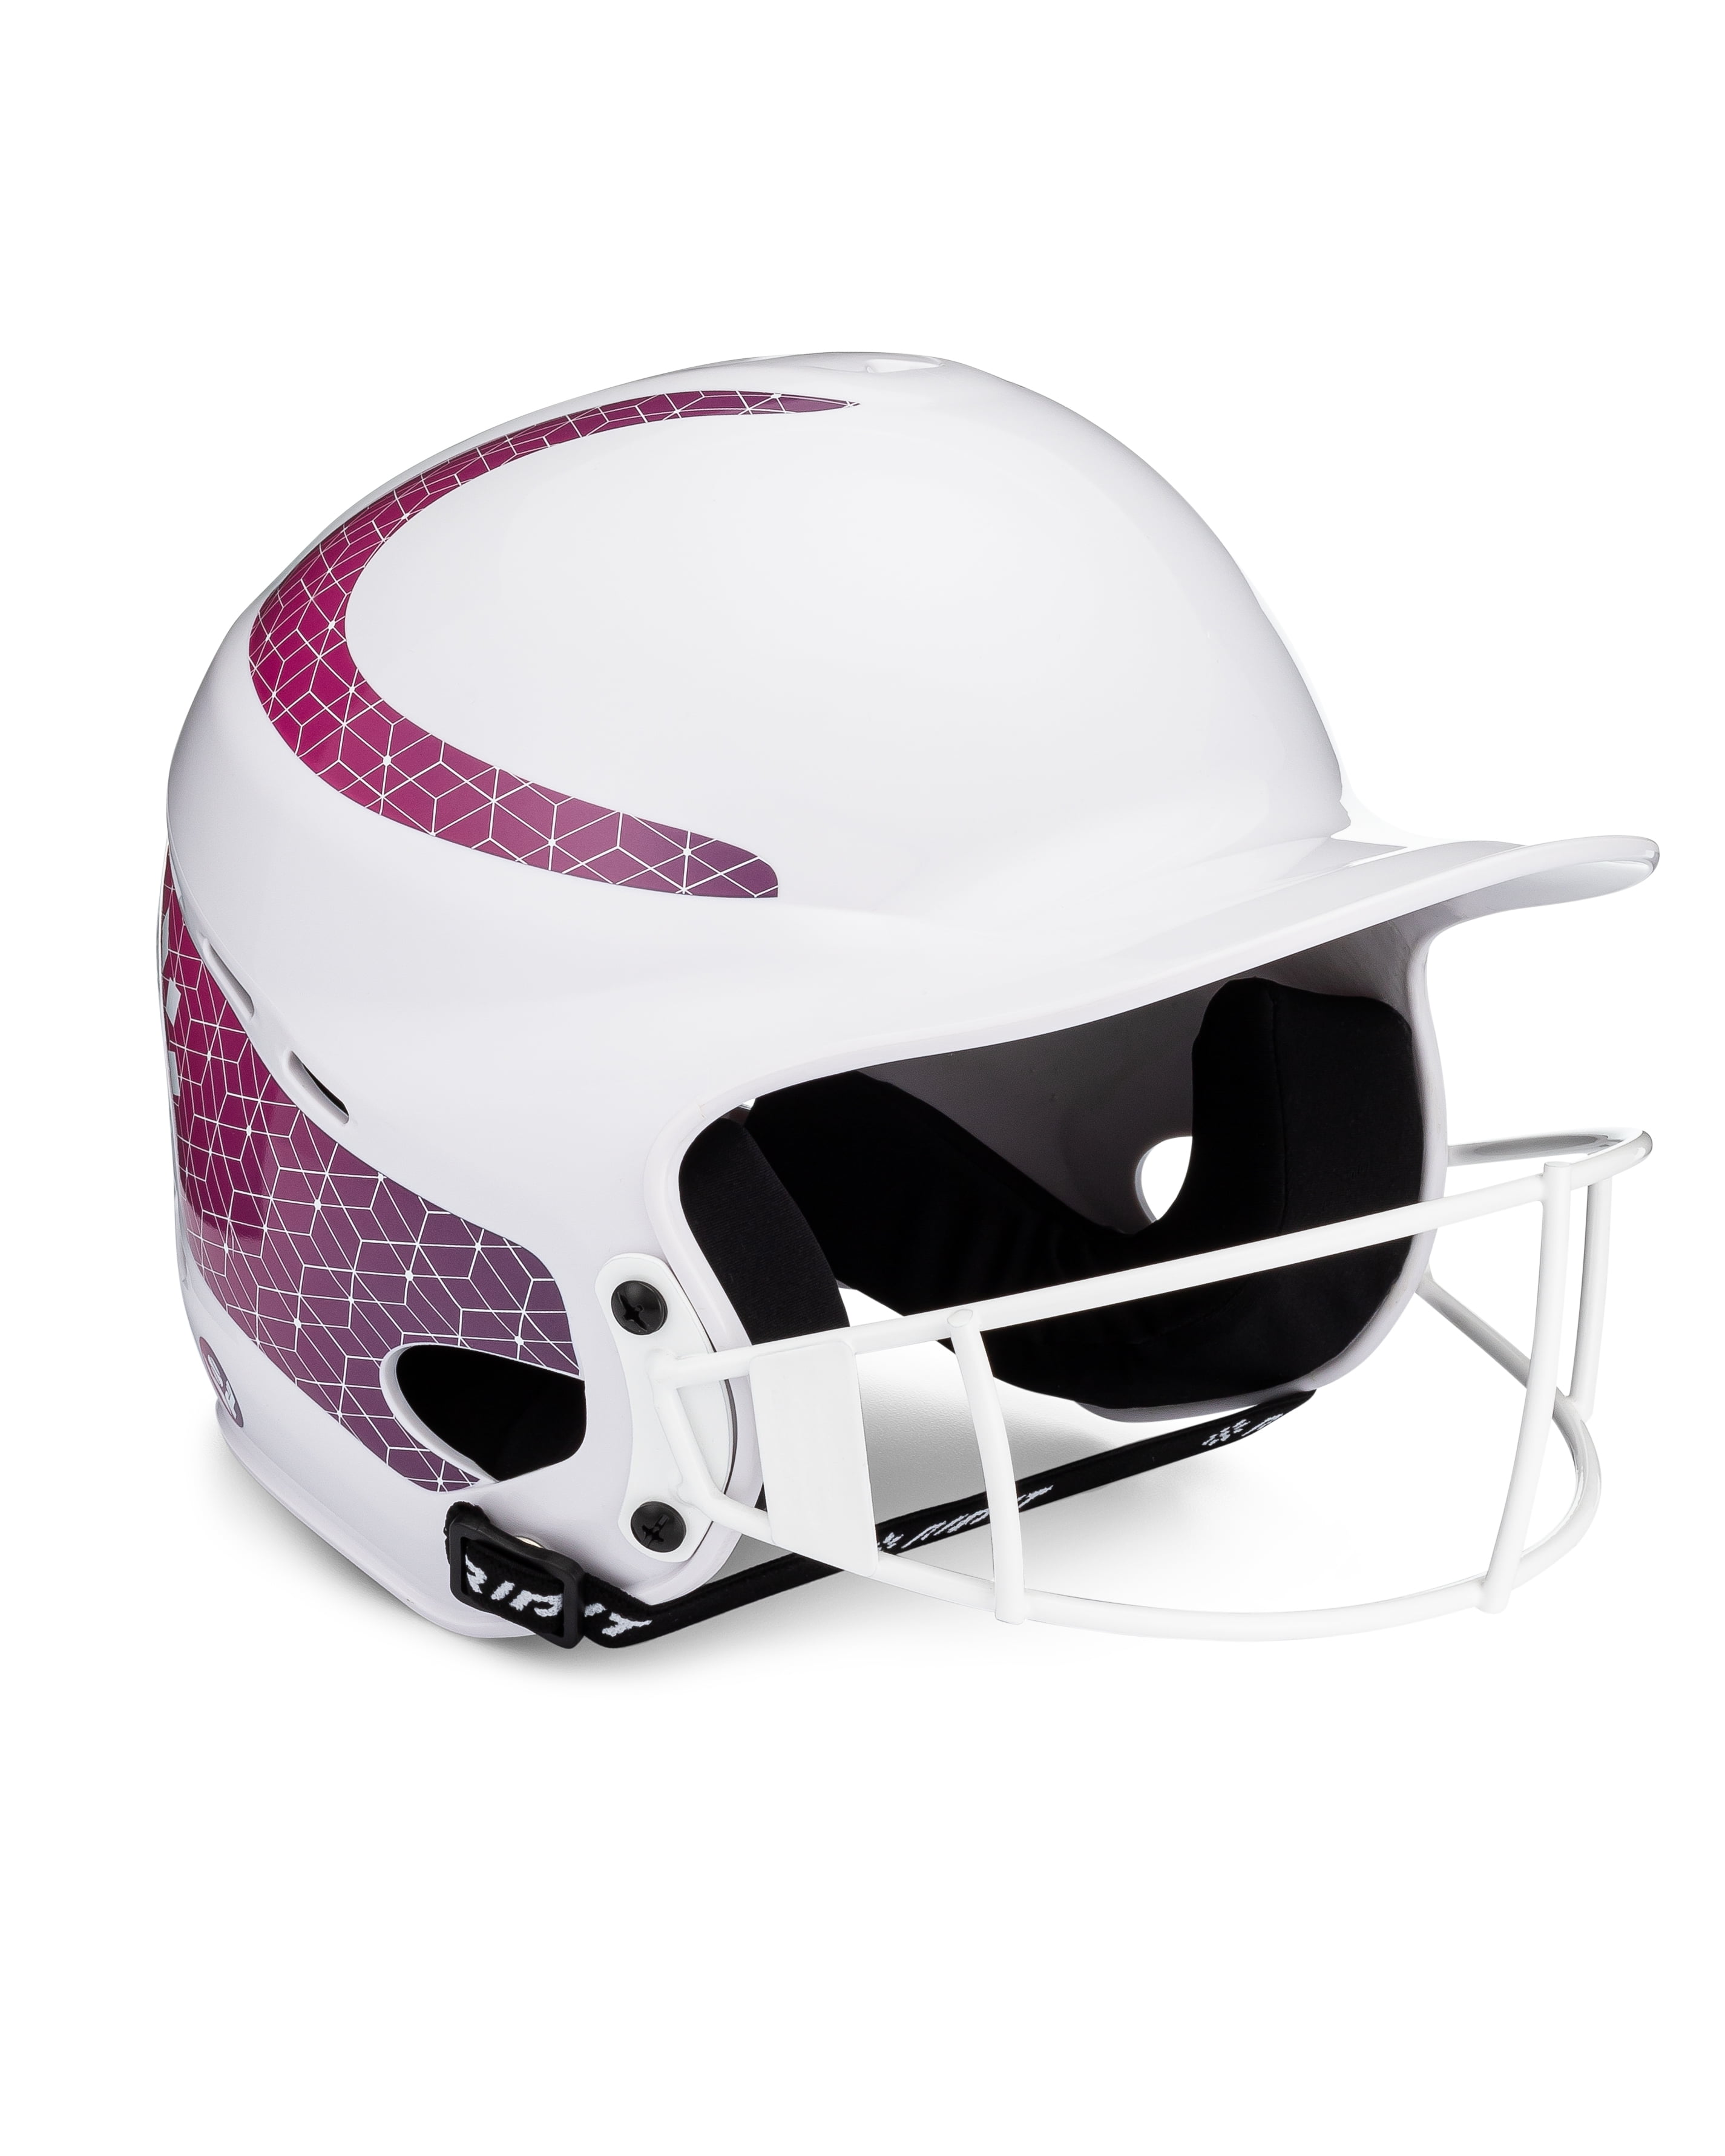 Anglekai 61PCS Hockey Helmet Repair Kit, Football Helmet Hardware Kit  Include 4 J Clips/ 4 Rubber Gaskets/ 4 R Shape Football Visor Clips/ 16  Screw